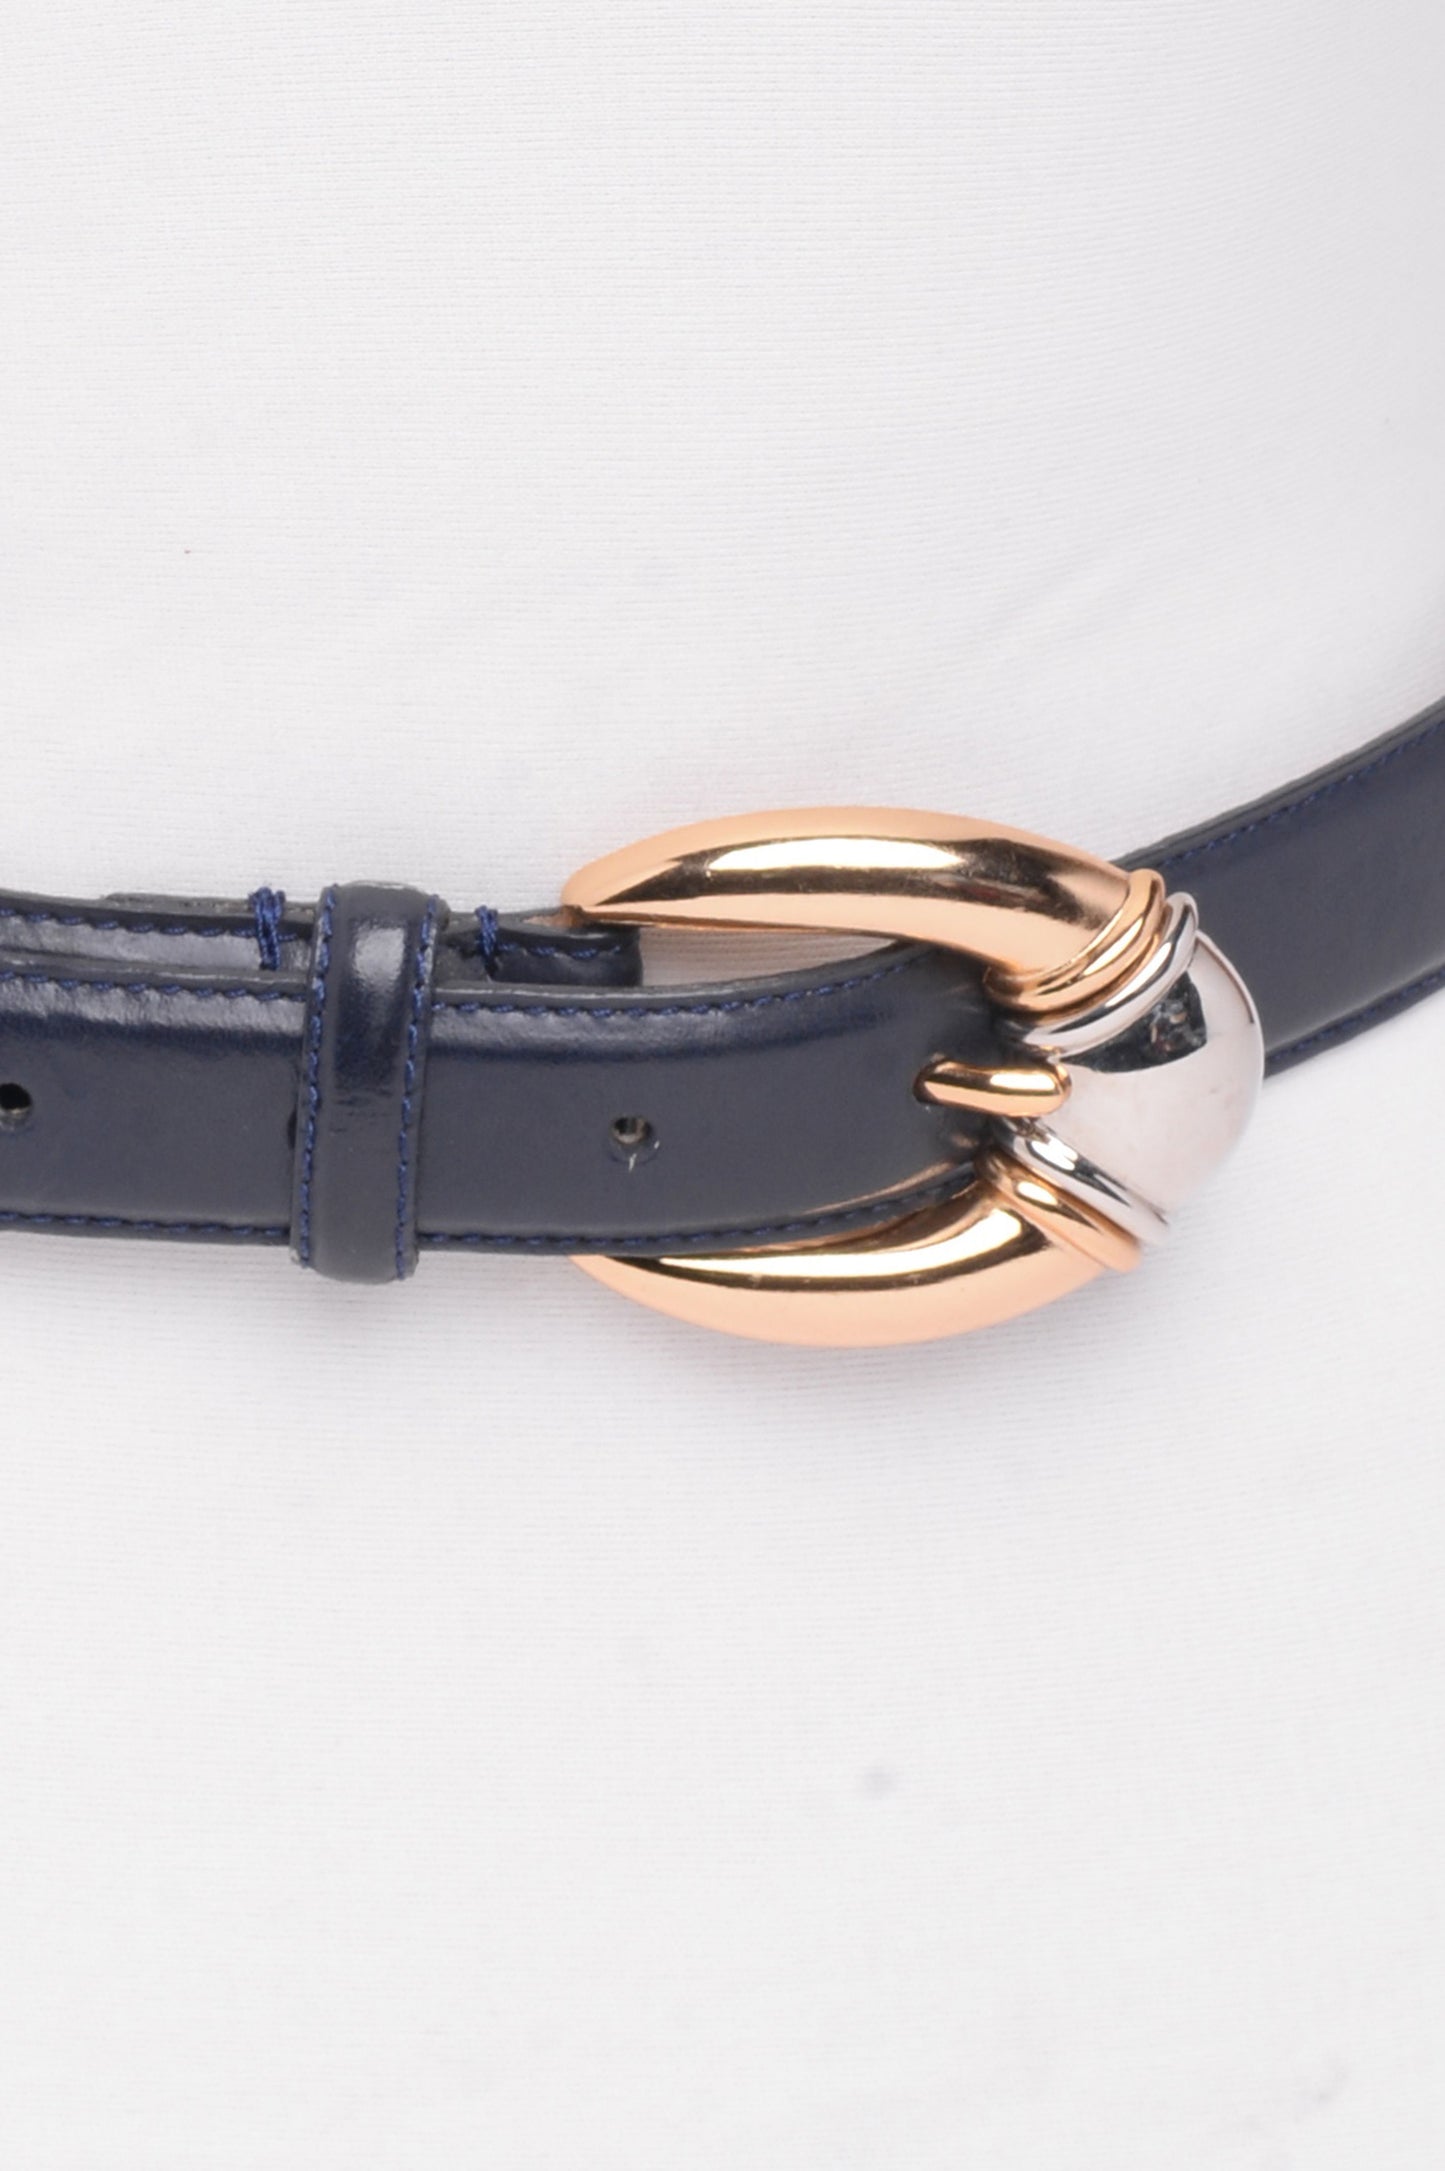 Navy Leather Belt